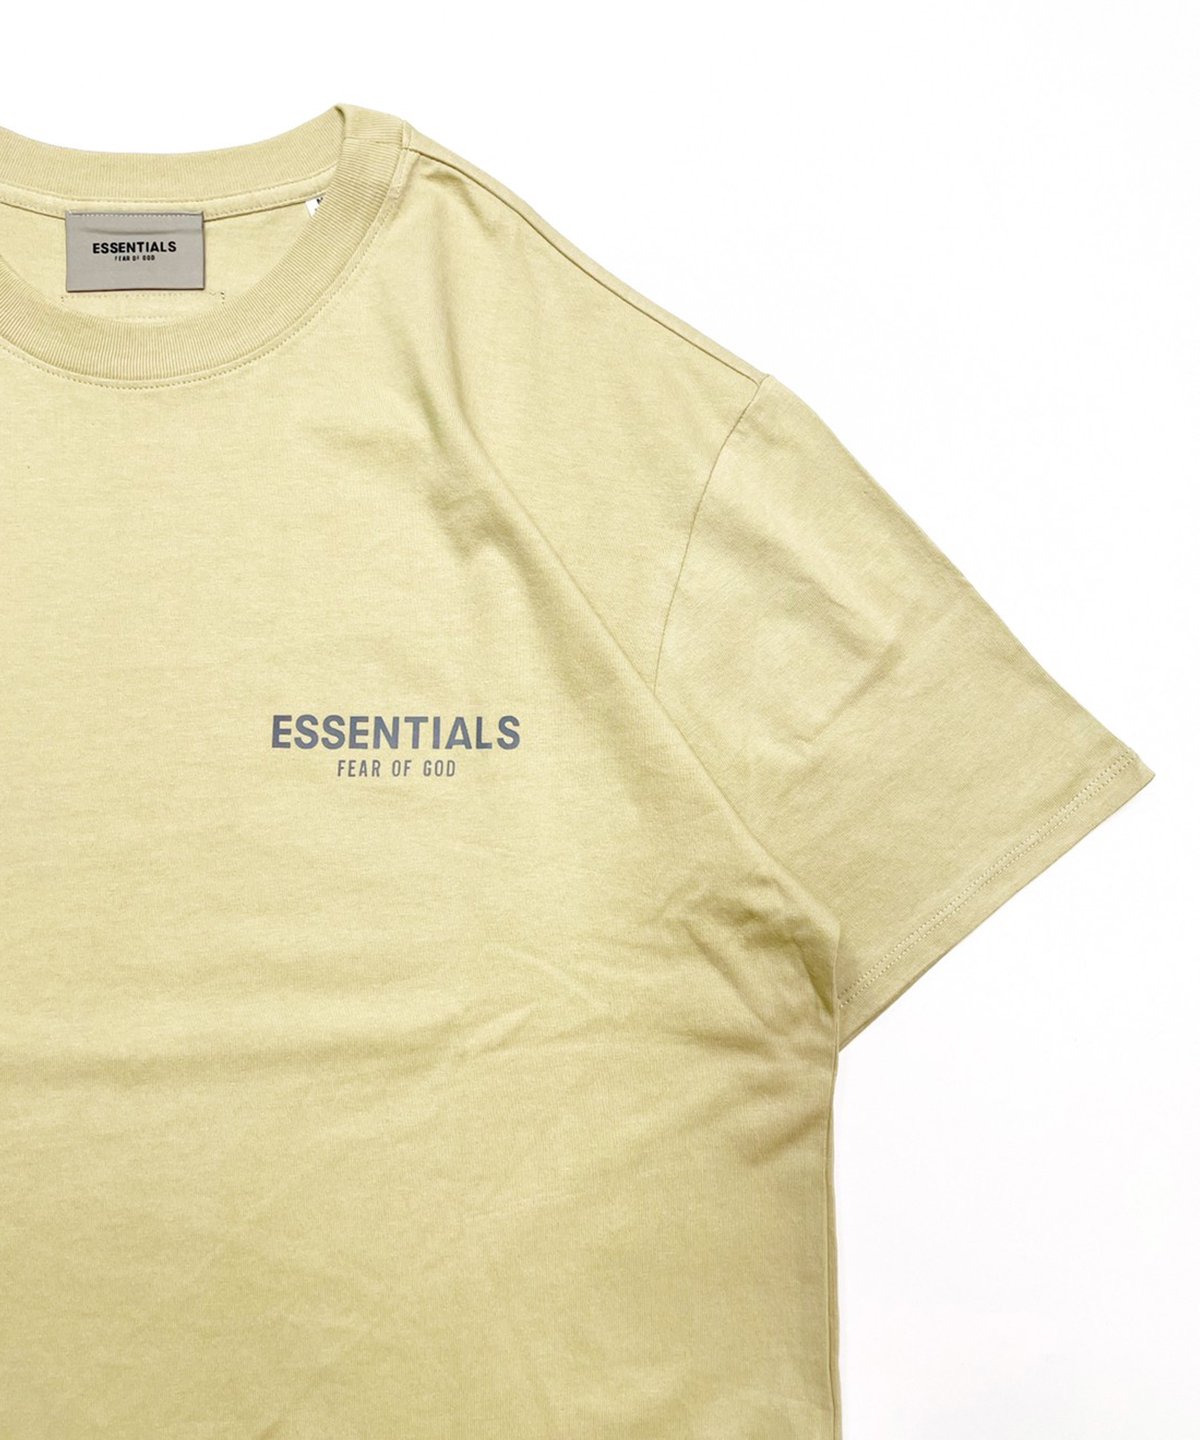 FOG ESSENTIALS リフレクターロゴ半袖Tシャツ - Fear of God Essentials Core Collection  T-shirt TAN